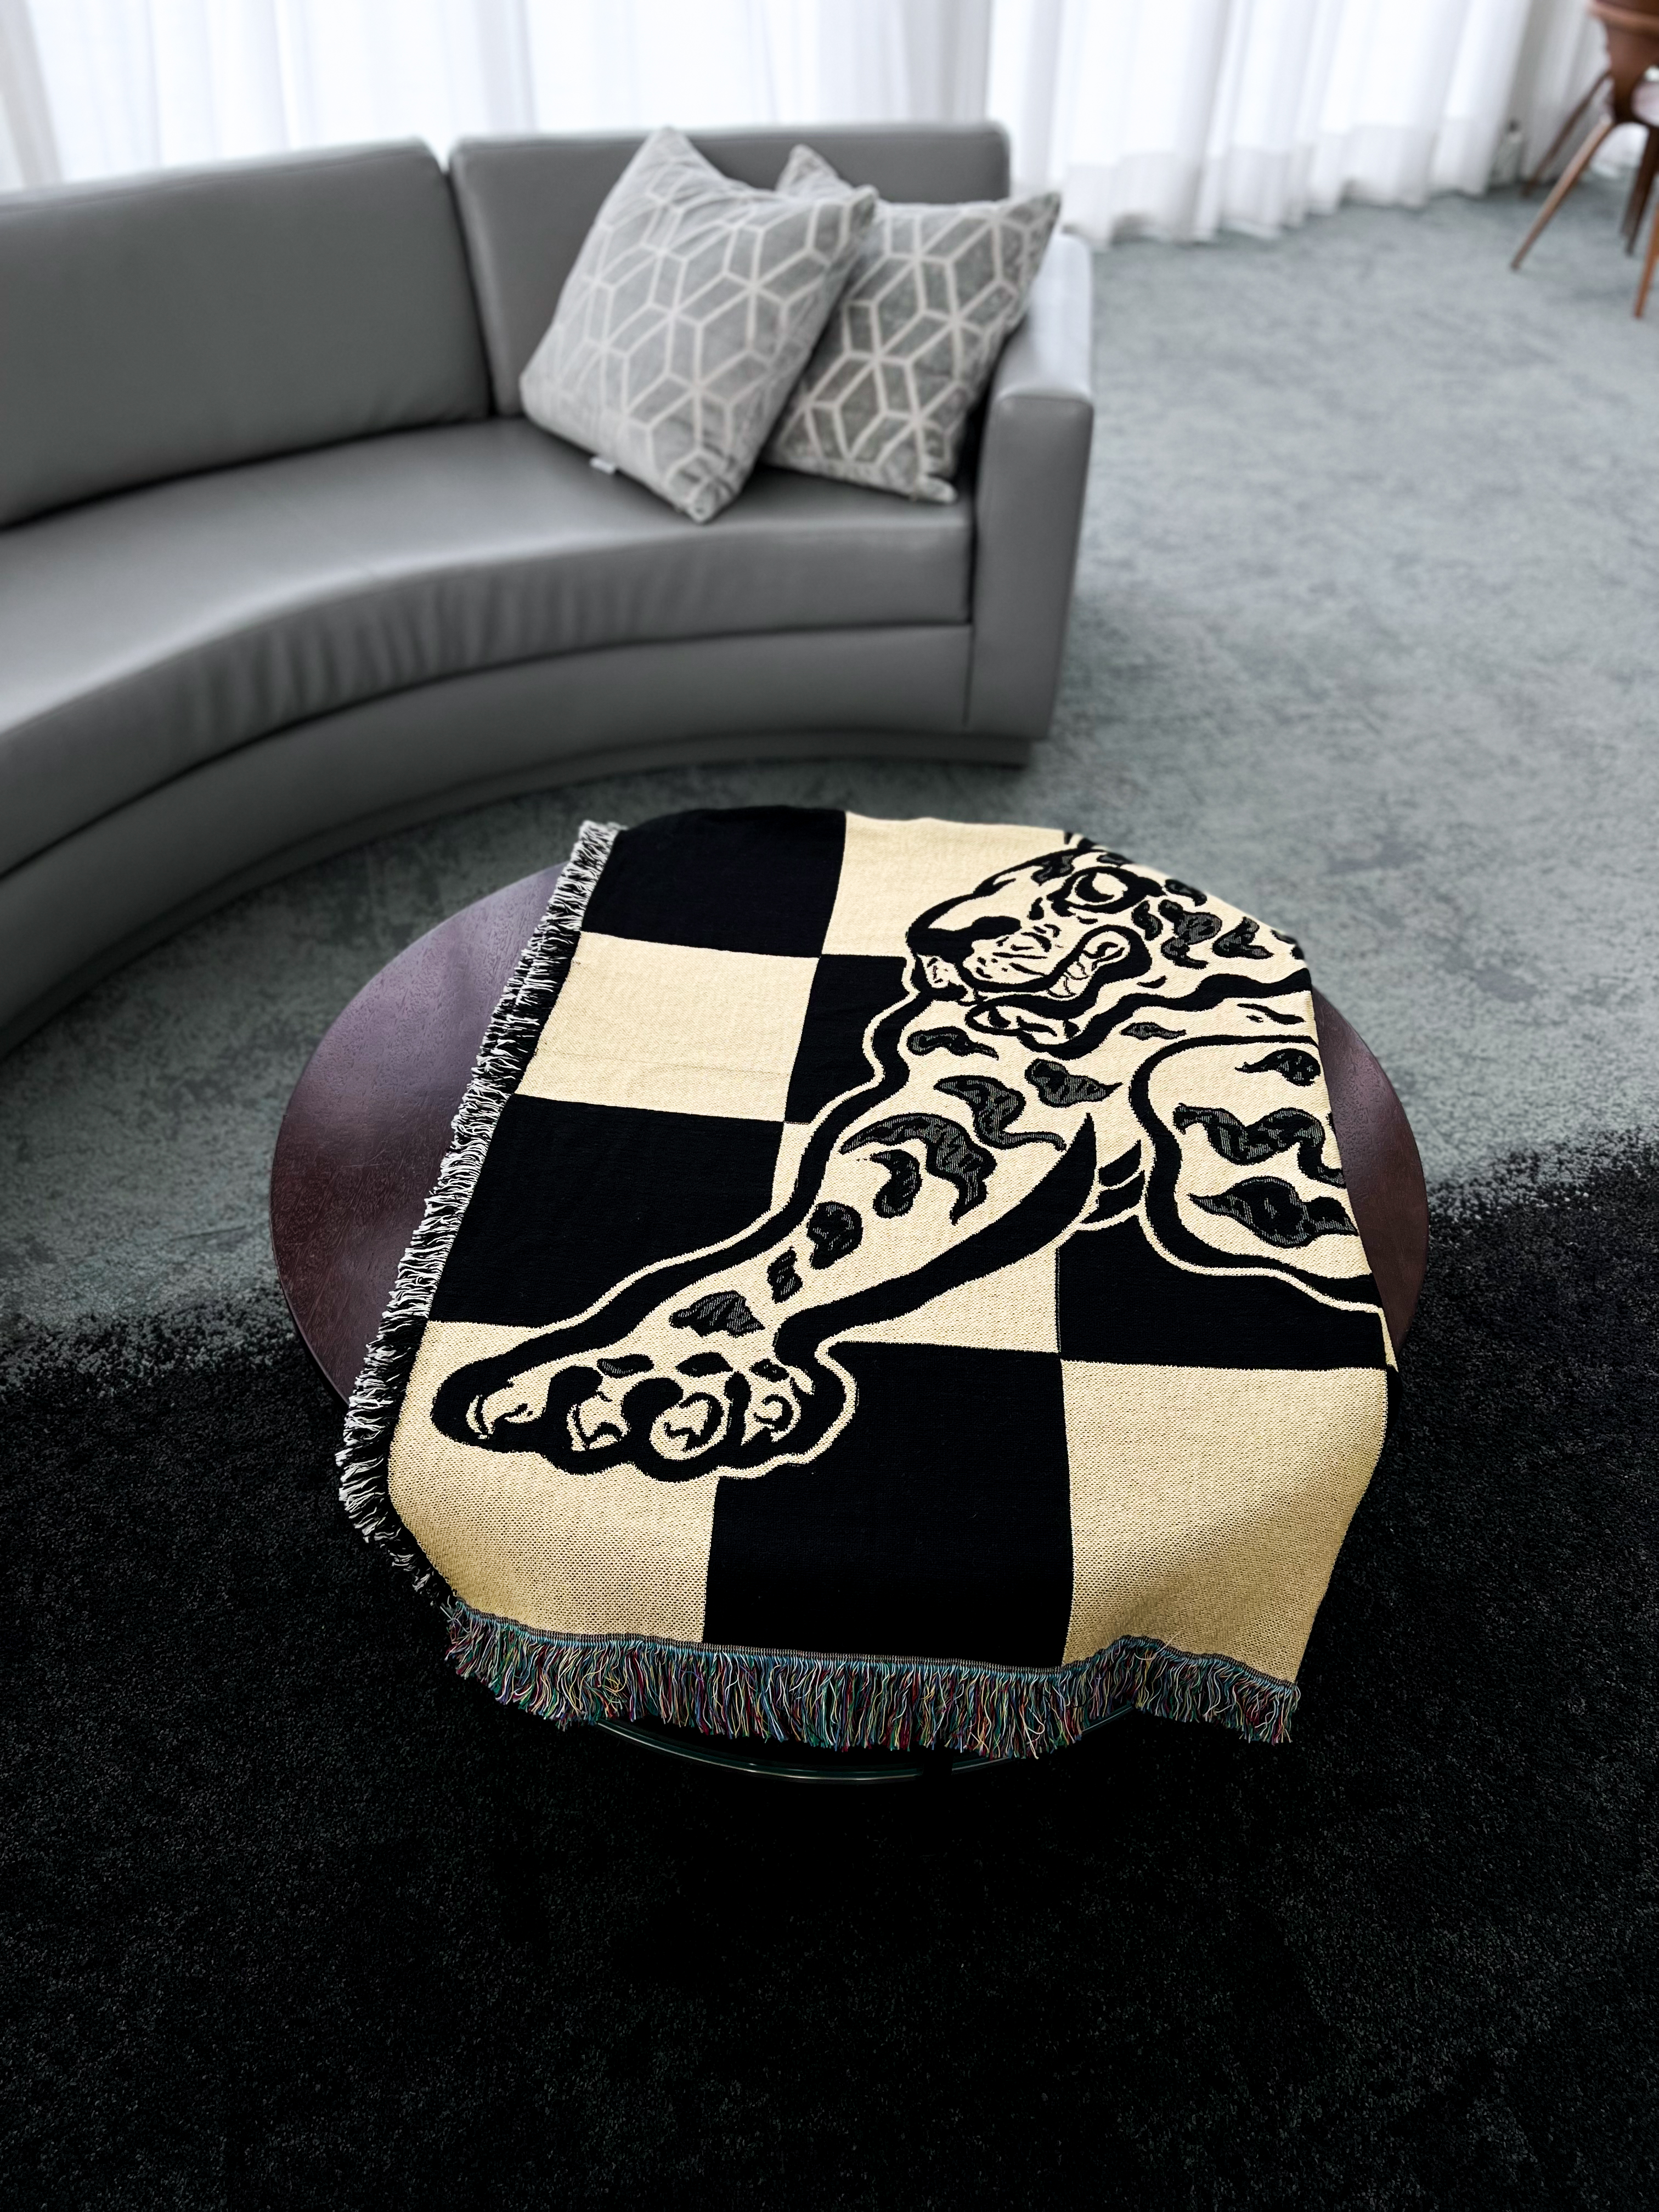 Art Cosmos Tiger's Chessboard Woven Cotton Blanket